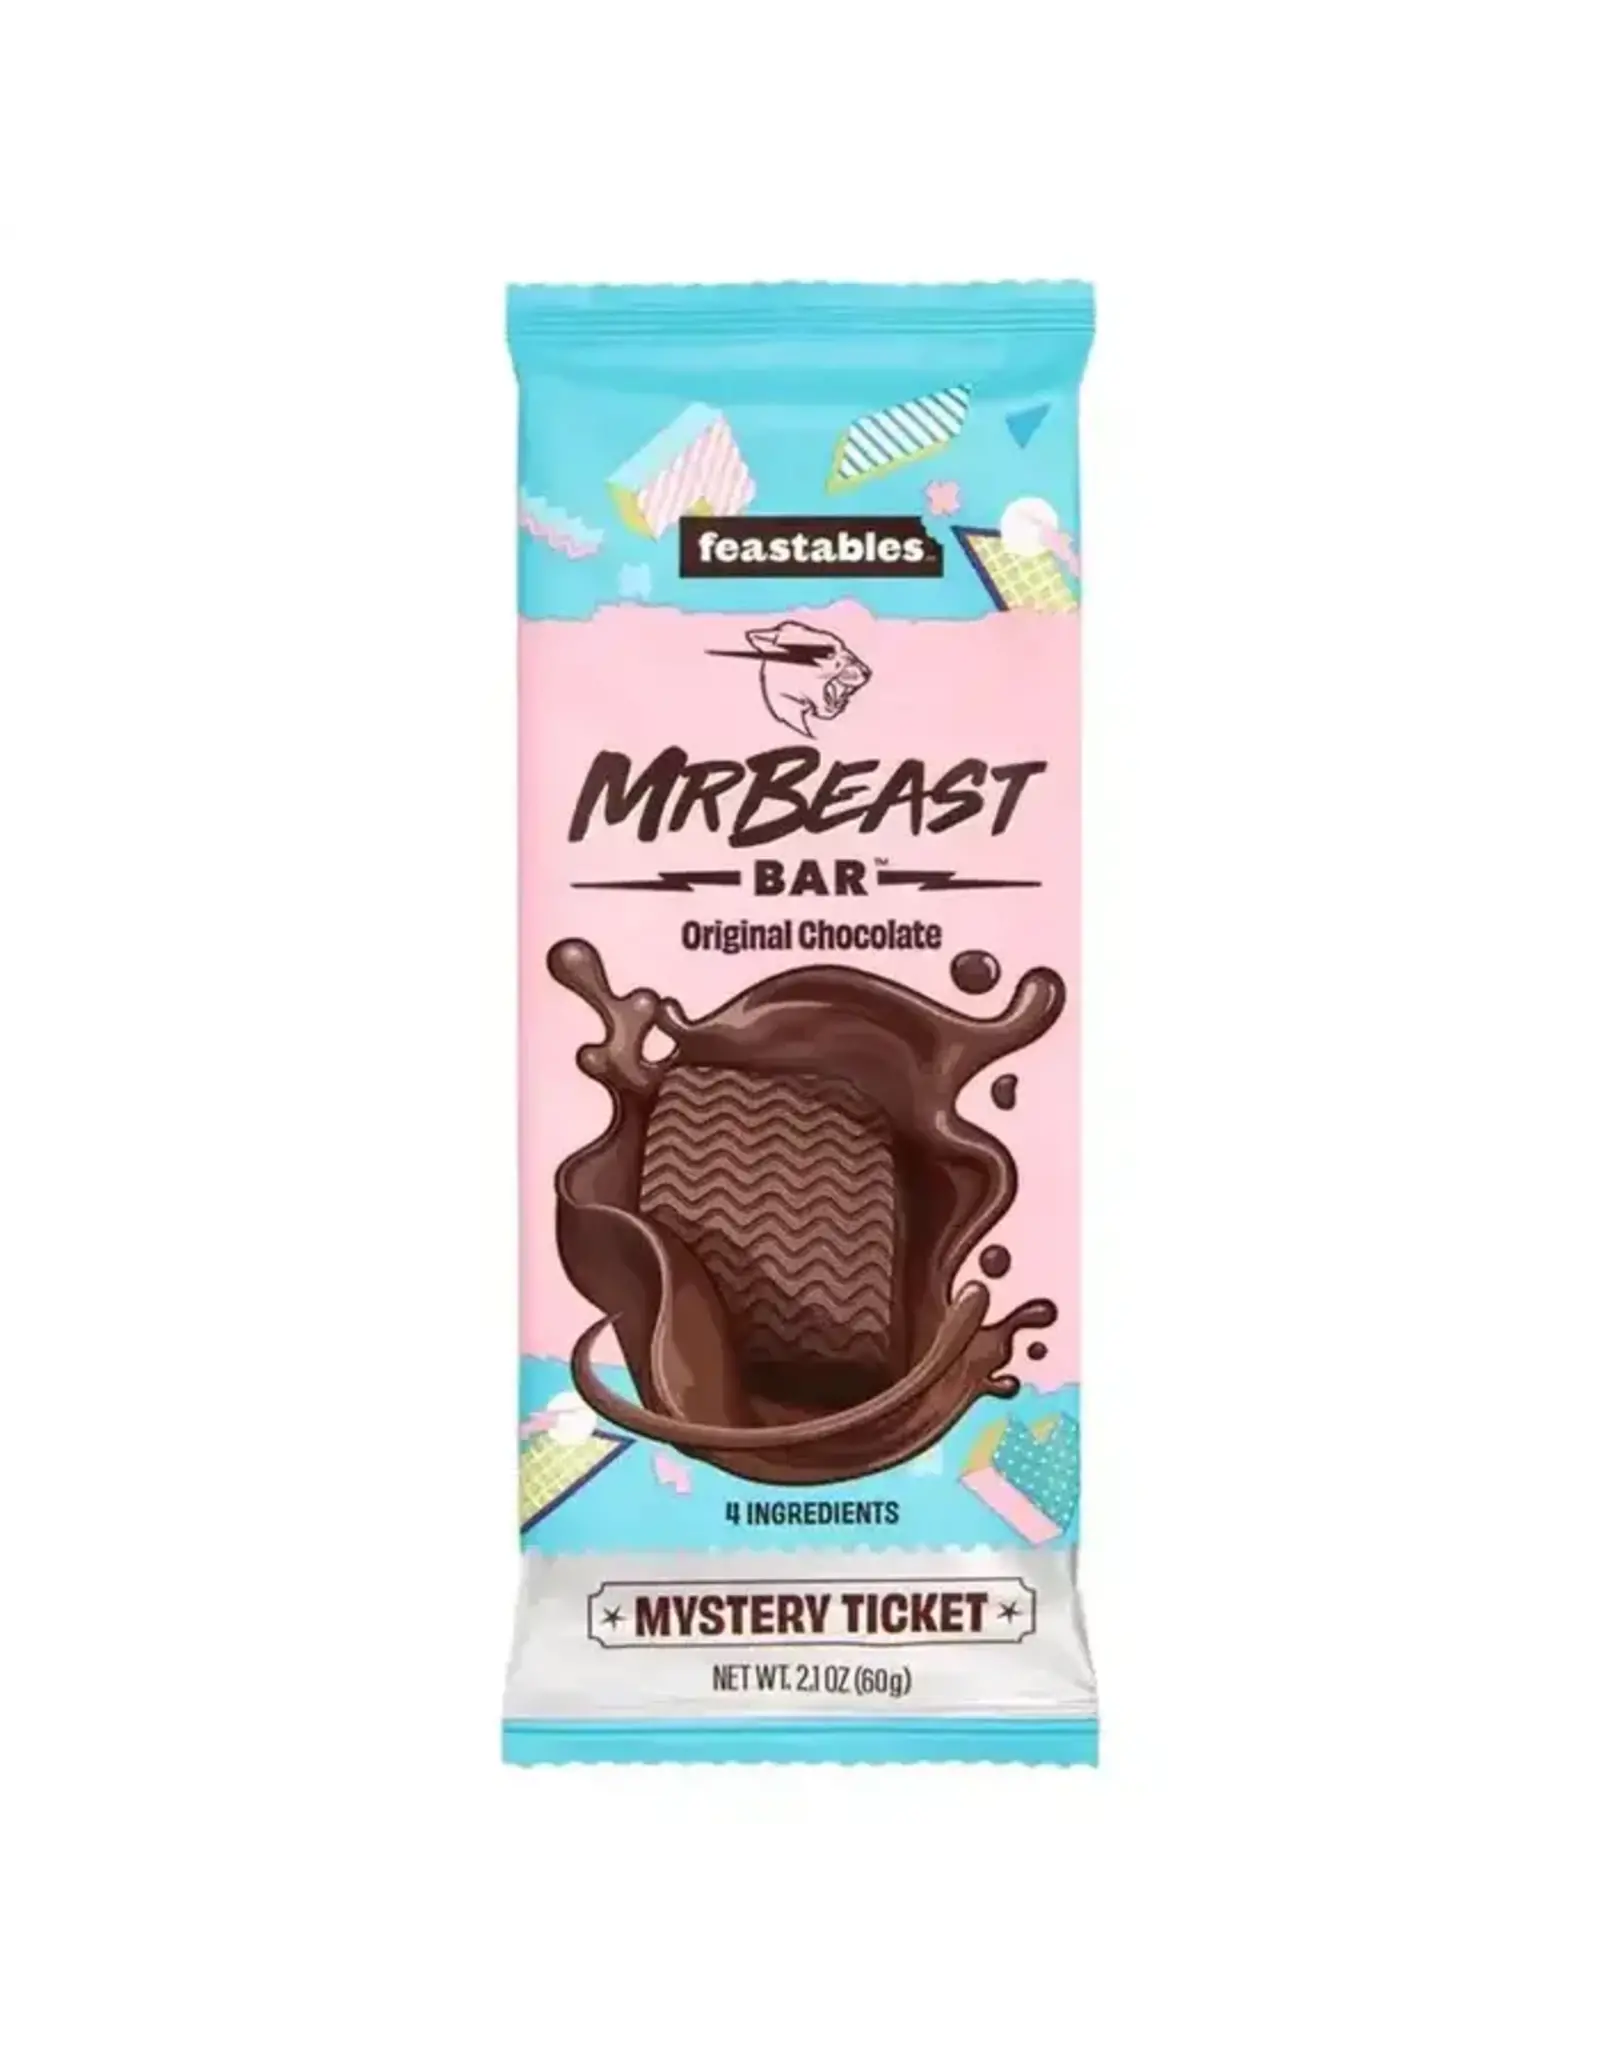 Mr Beast Feastables Chocolate Bar -  Original Chocolate - 60g